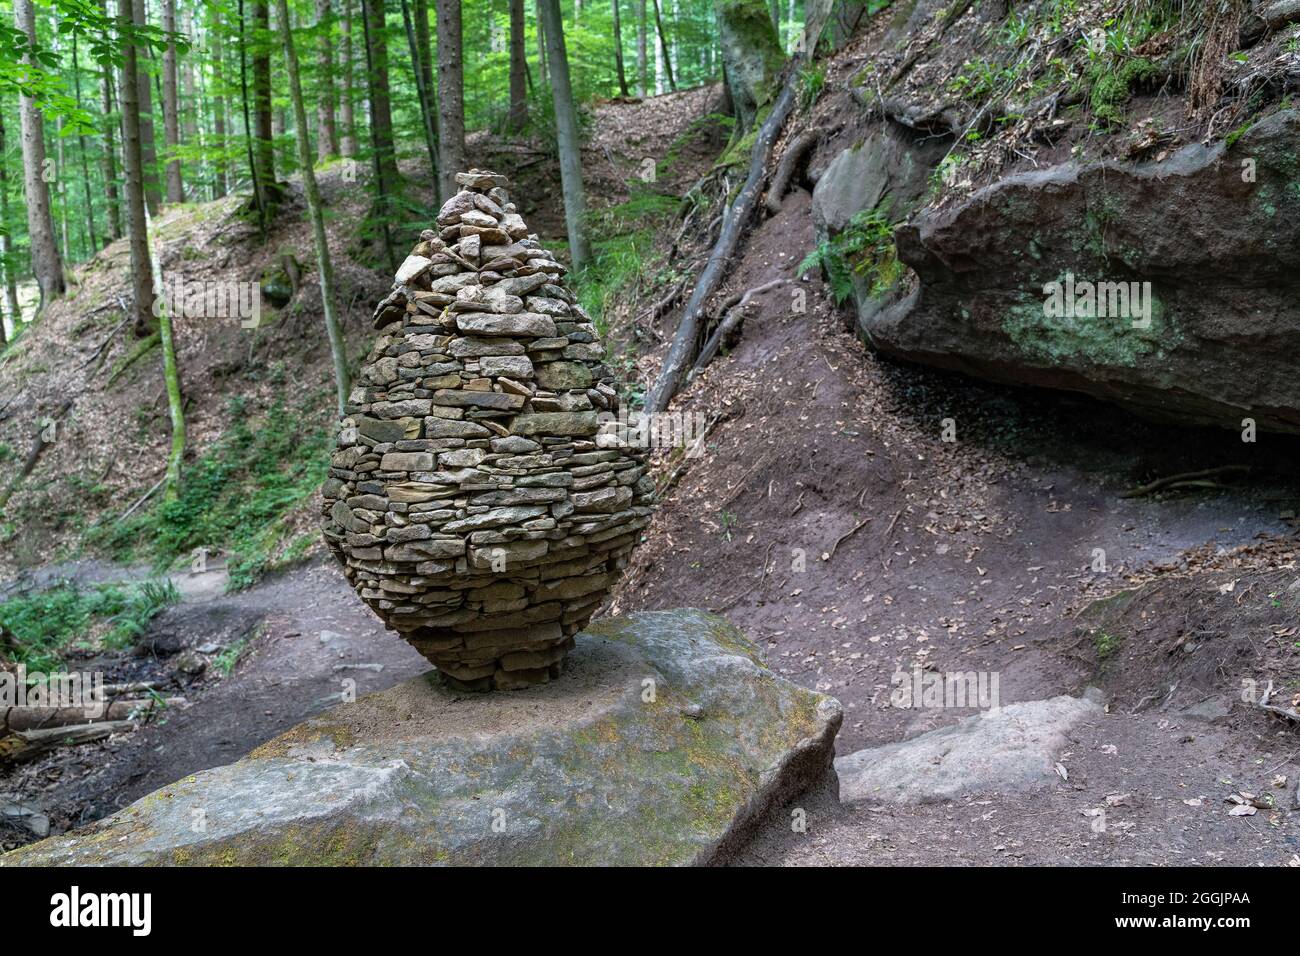 Europe, Germany, Baden-Wuerttemberg, Swabian-Franconian Forest, Spiegelberg, Artful cairn in the Tobel Gorge Stock Photo